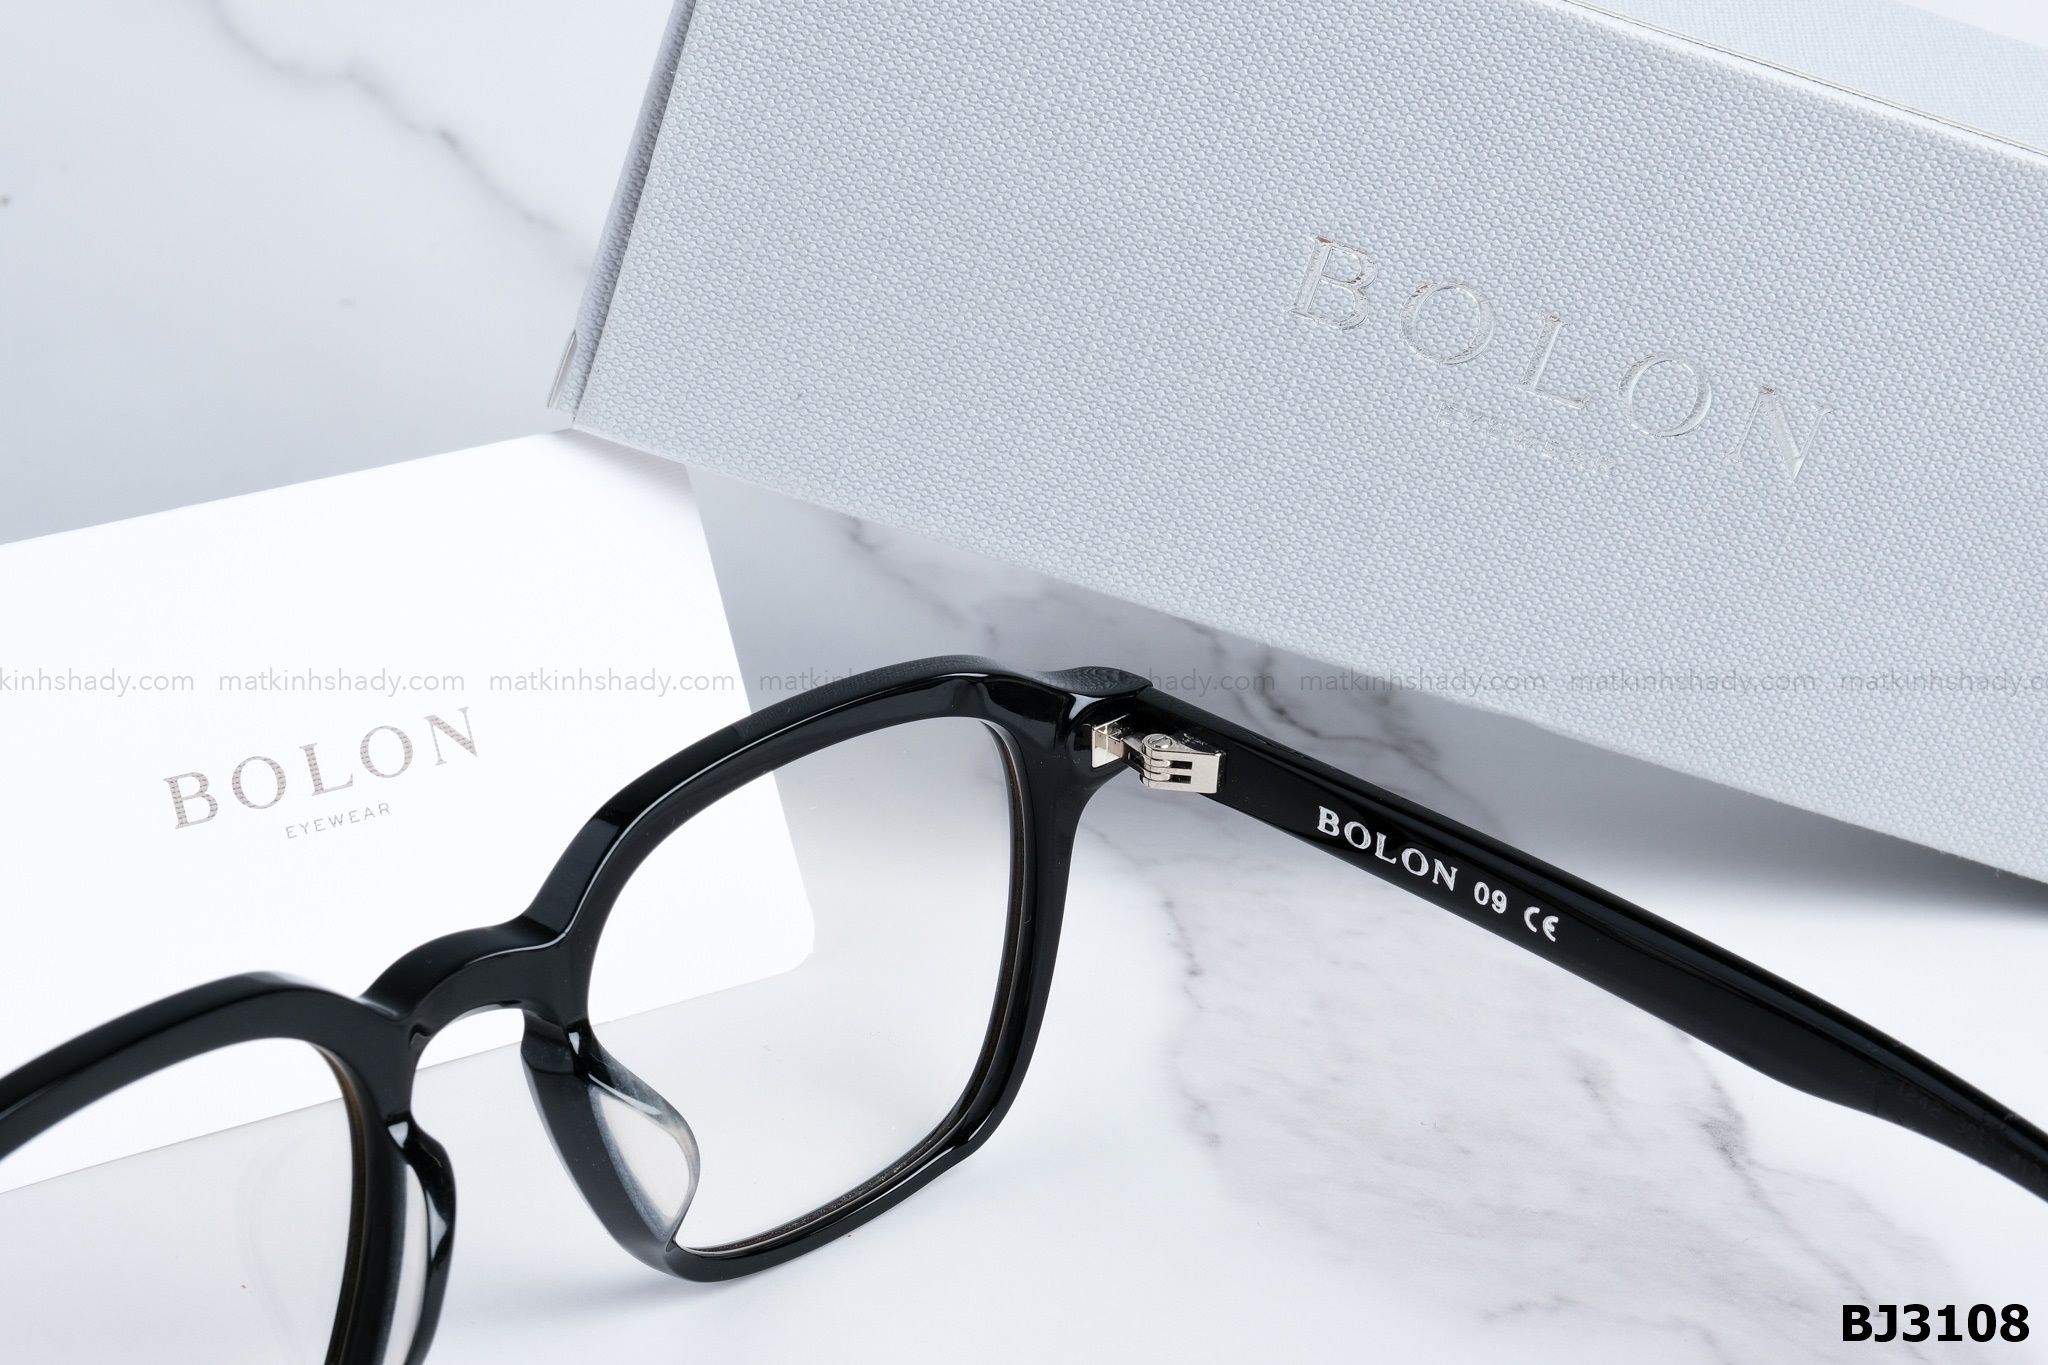  Bolon Eyewear - Glasses - BJ3108 